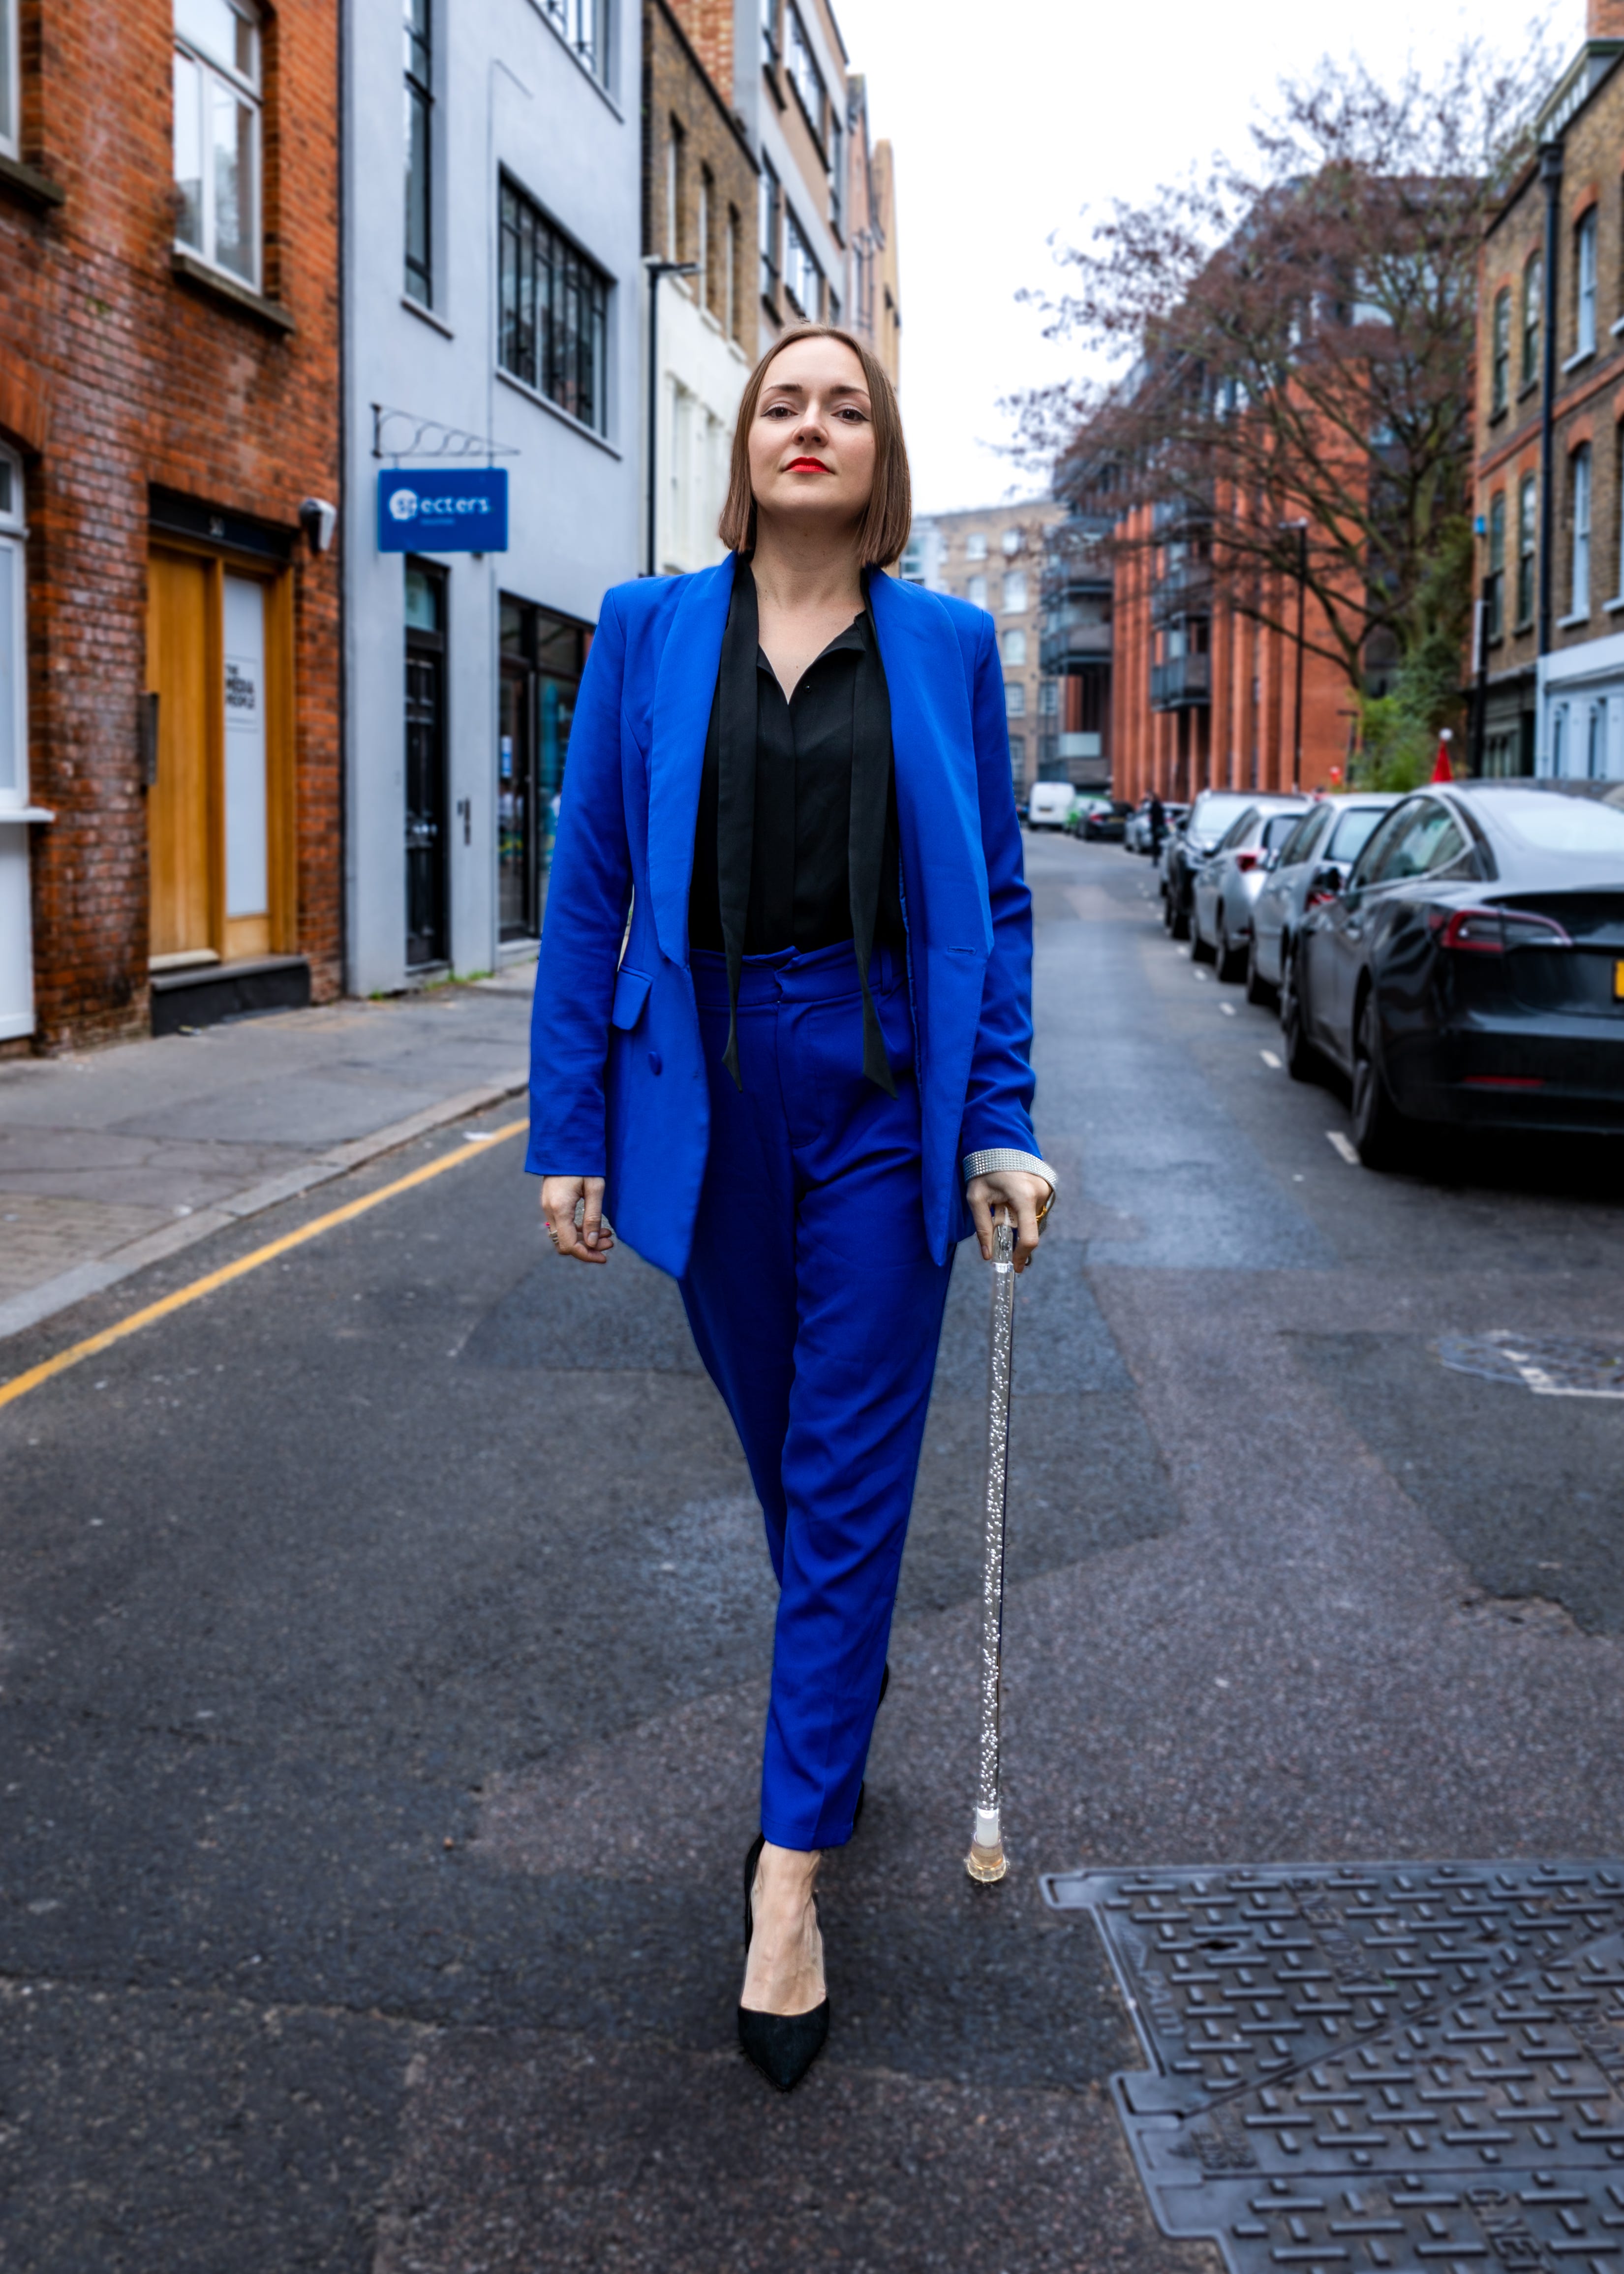 We talk adaptive fashion with Victoria Jenkins